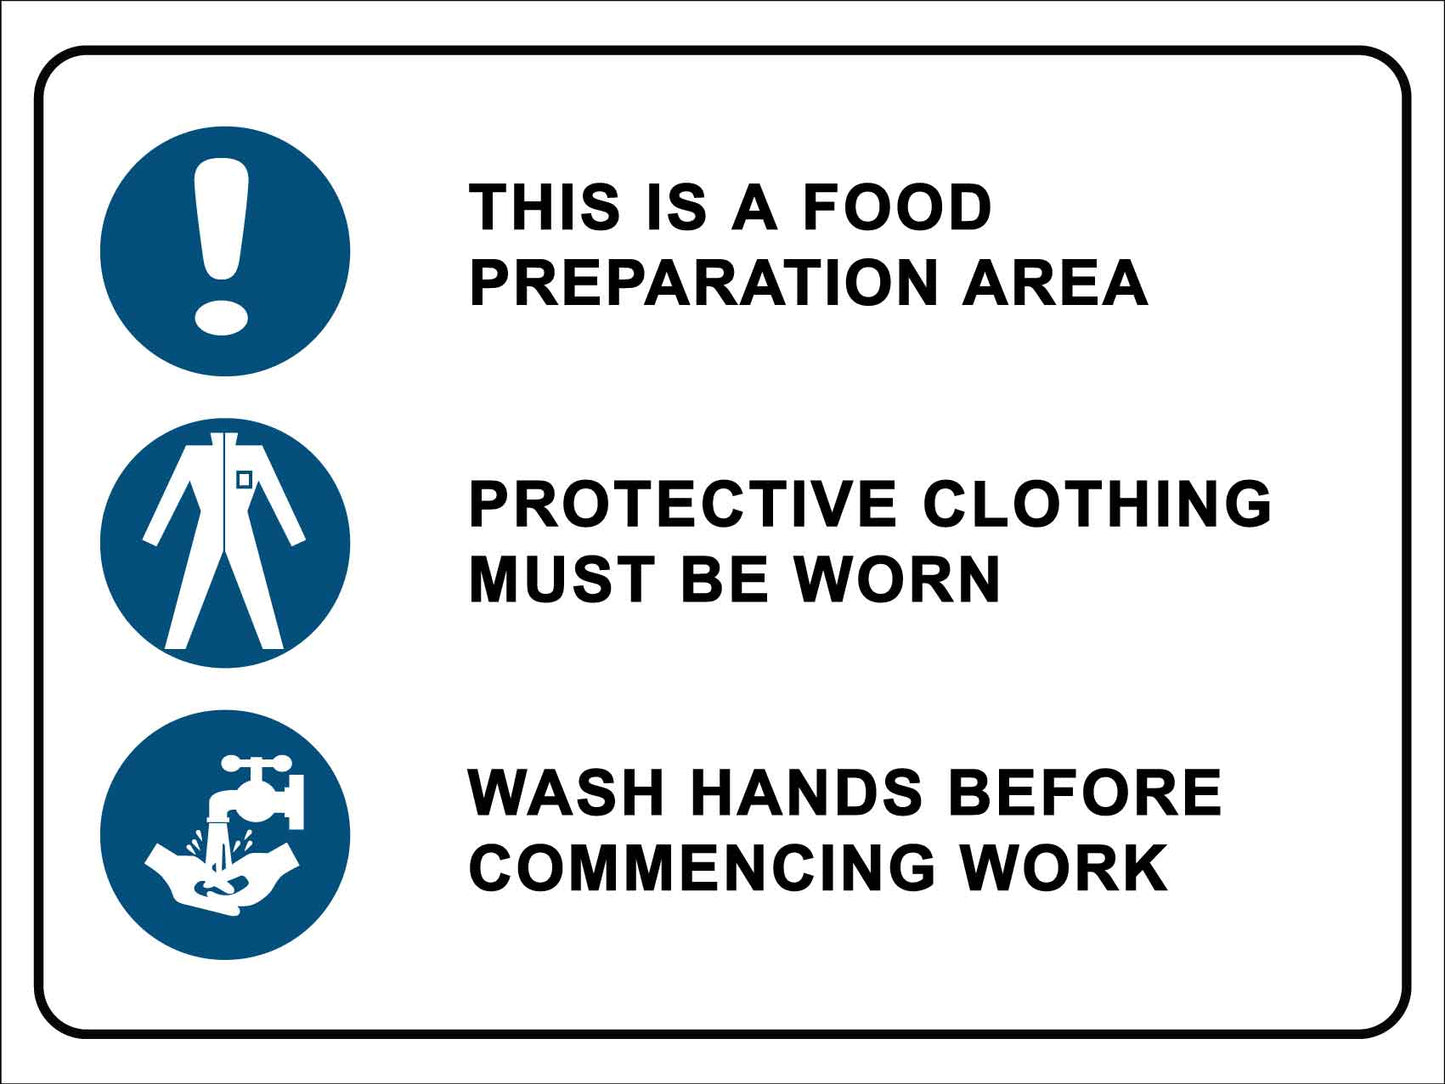 Food Preparation Area Sign